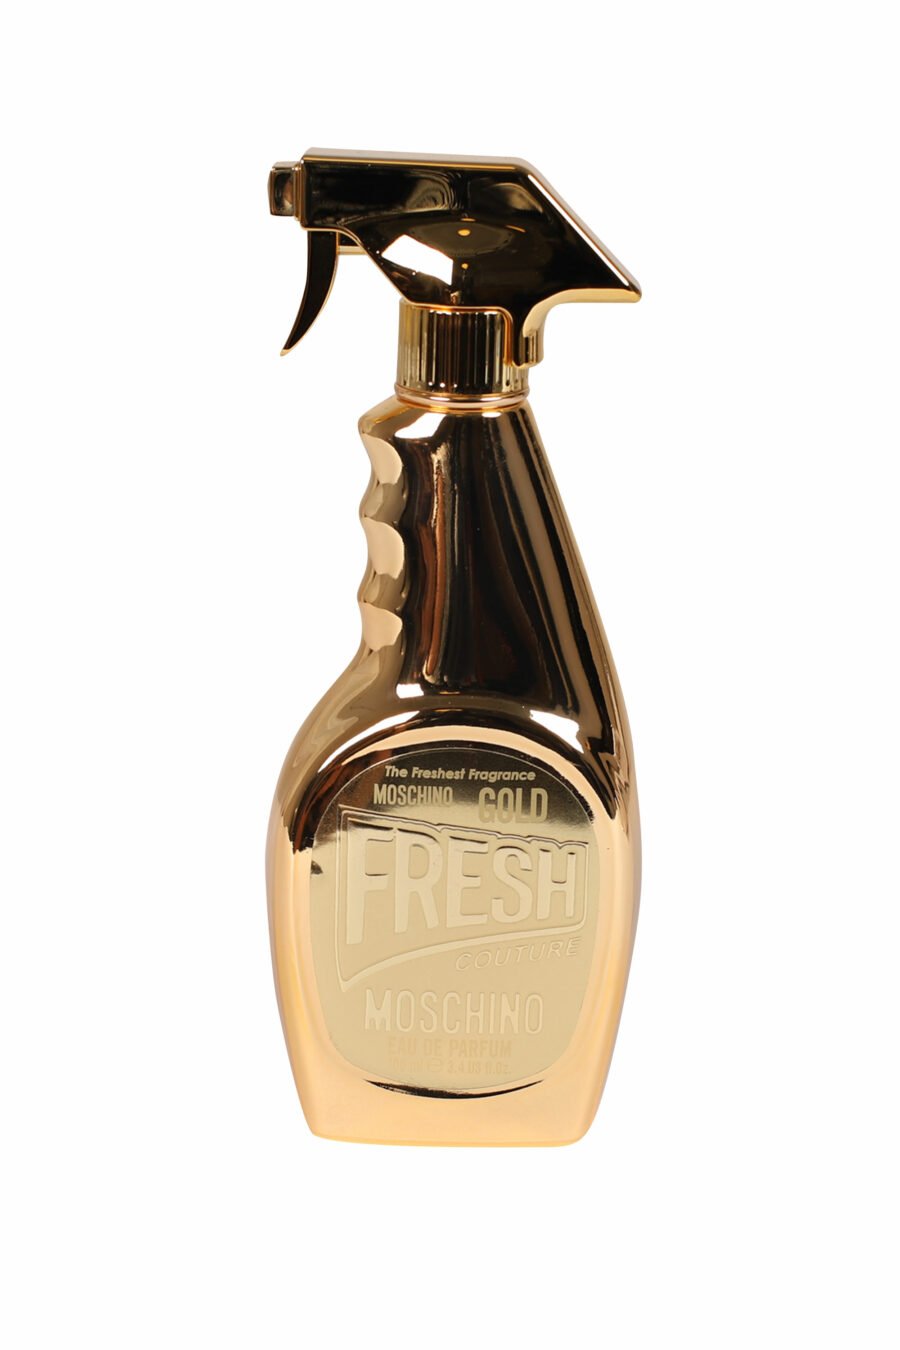 Moschino "Fresh Gold" eau de parfum - Photos 3327